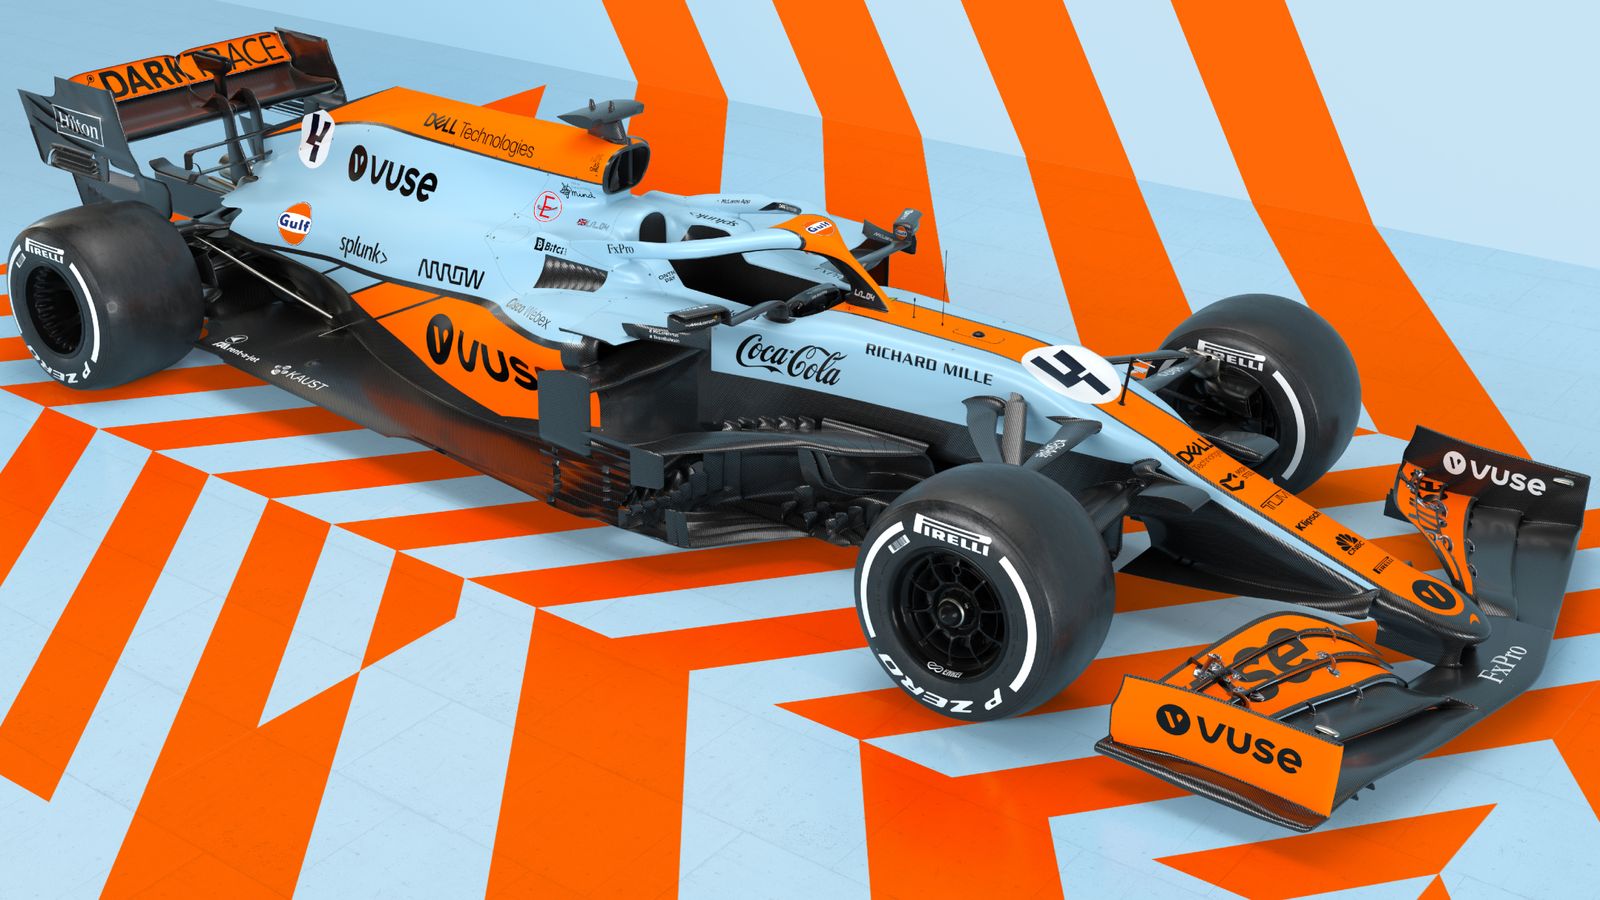 McLaren reveal retro blue and orange Gulf Oil legendary livery for F1 car at Monaco Grand Prix F1 News